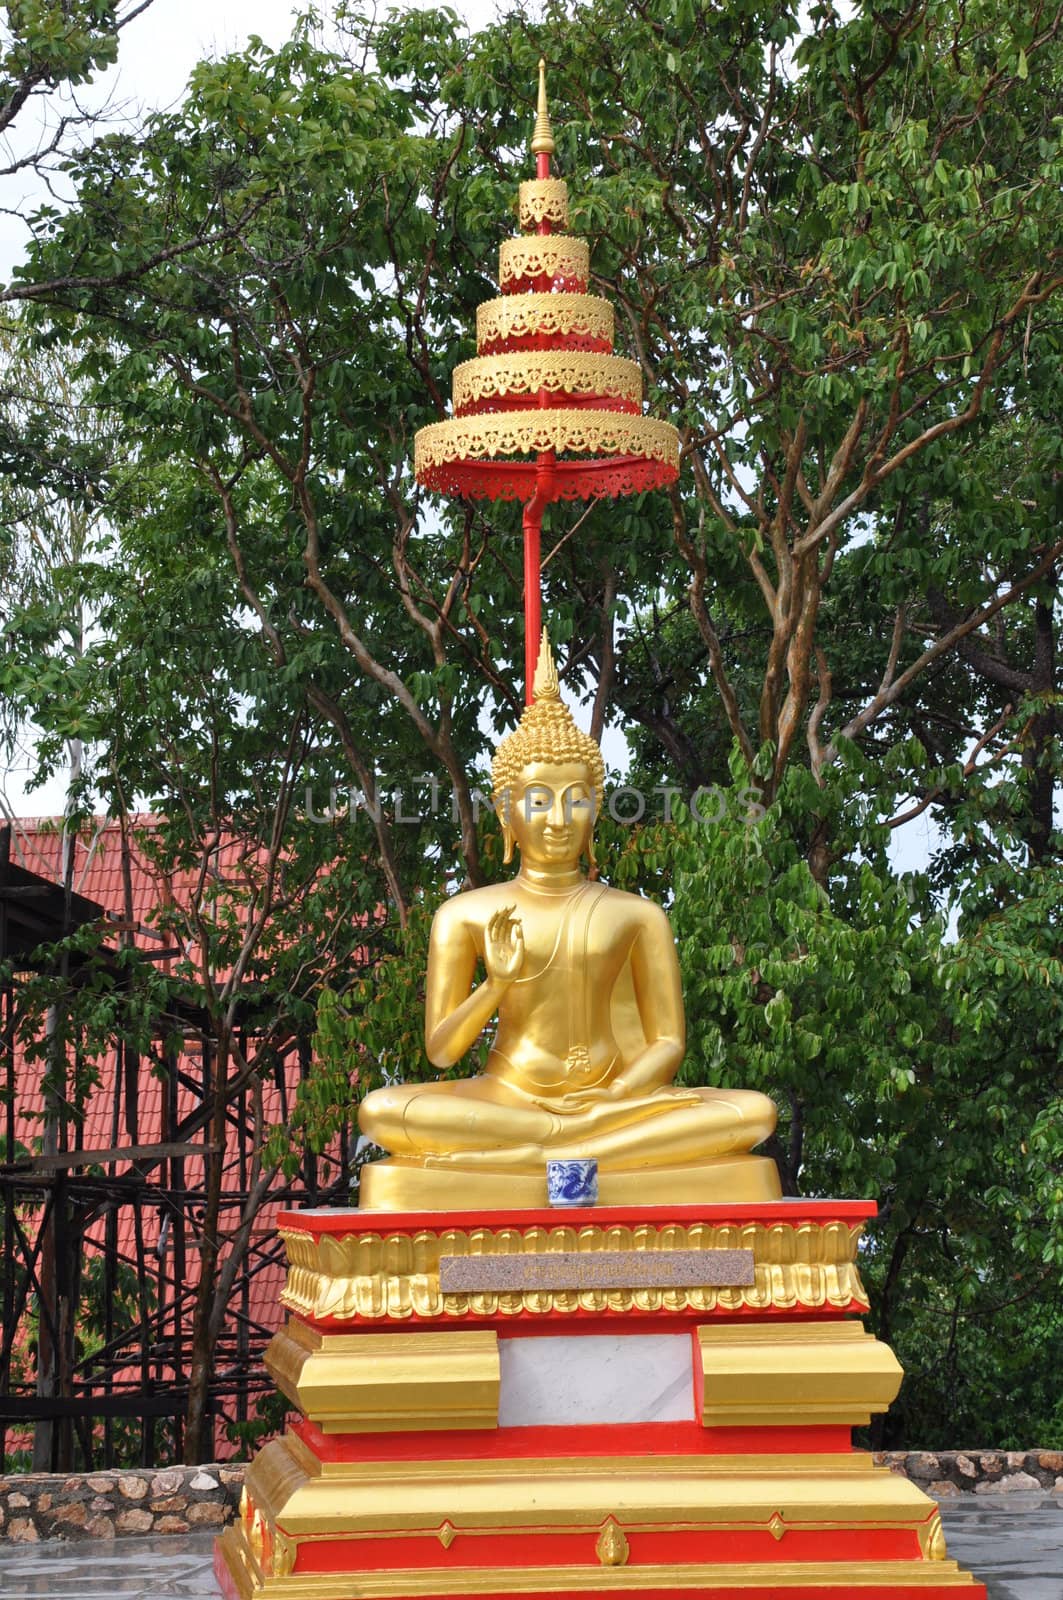 The Big Buddha site in Pattaya, Thailand